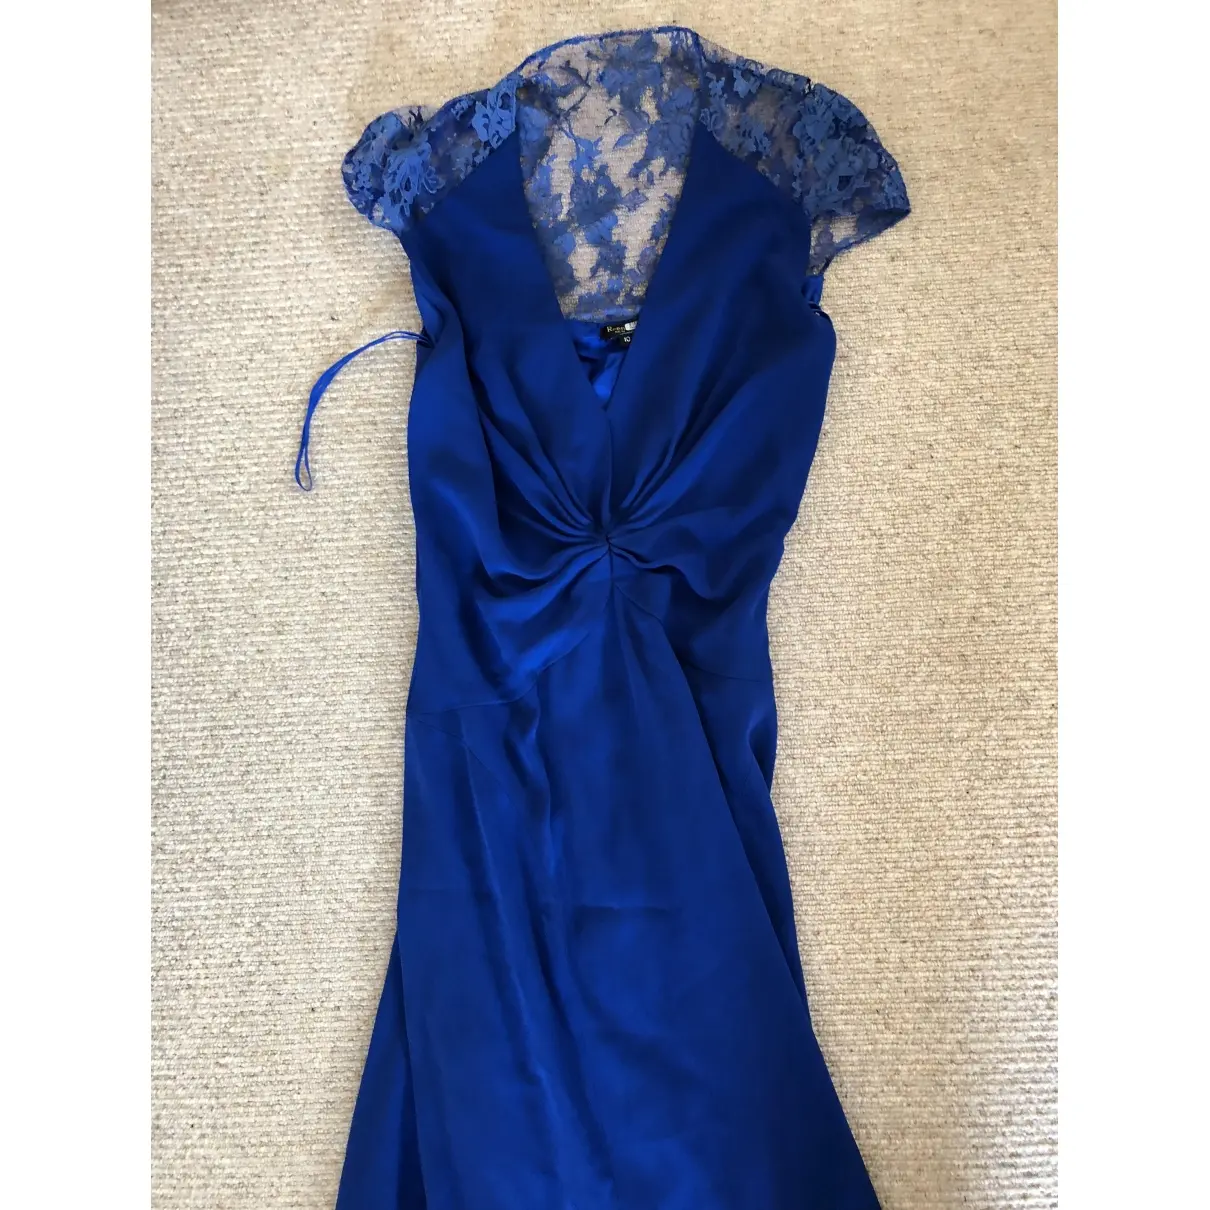 Reem Acra Mid-length dress for sale